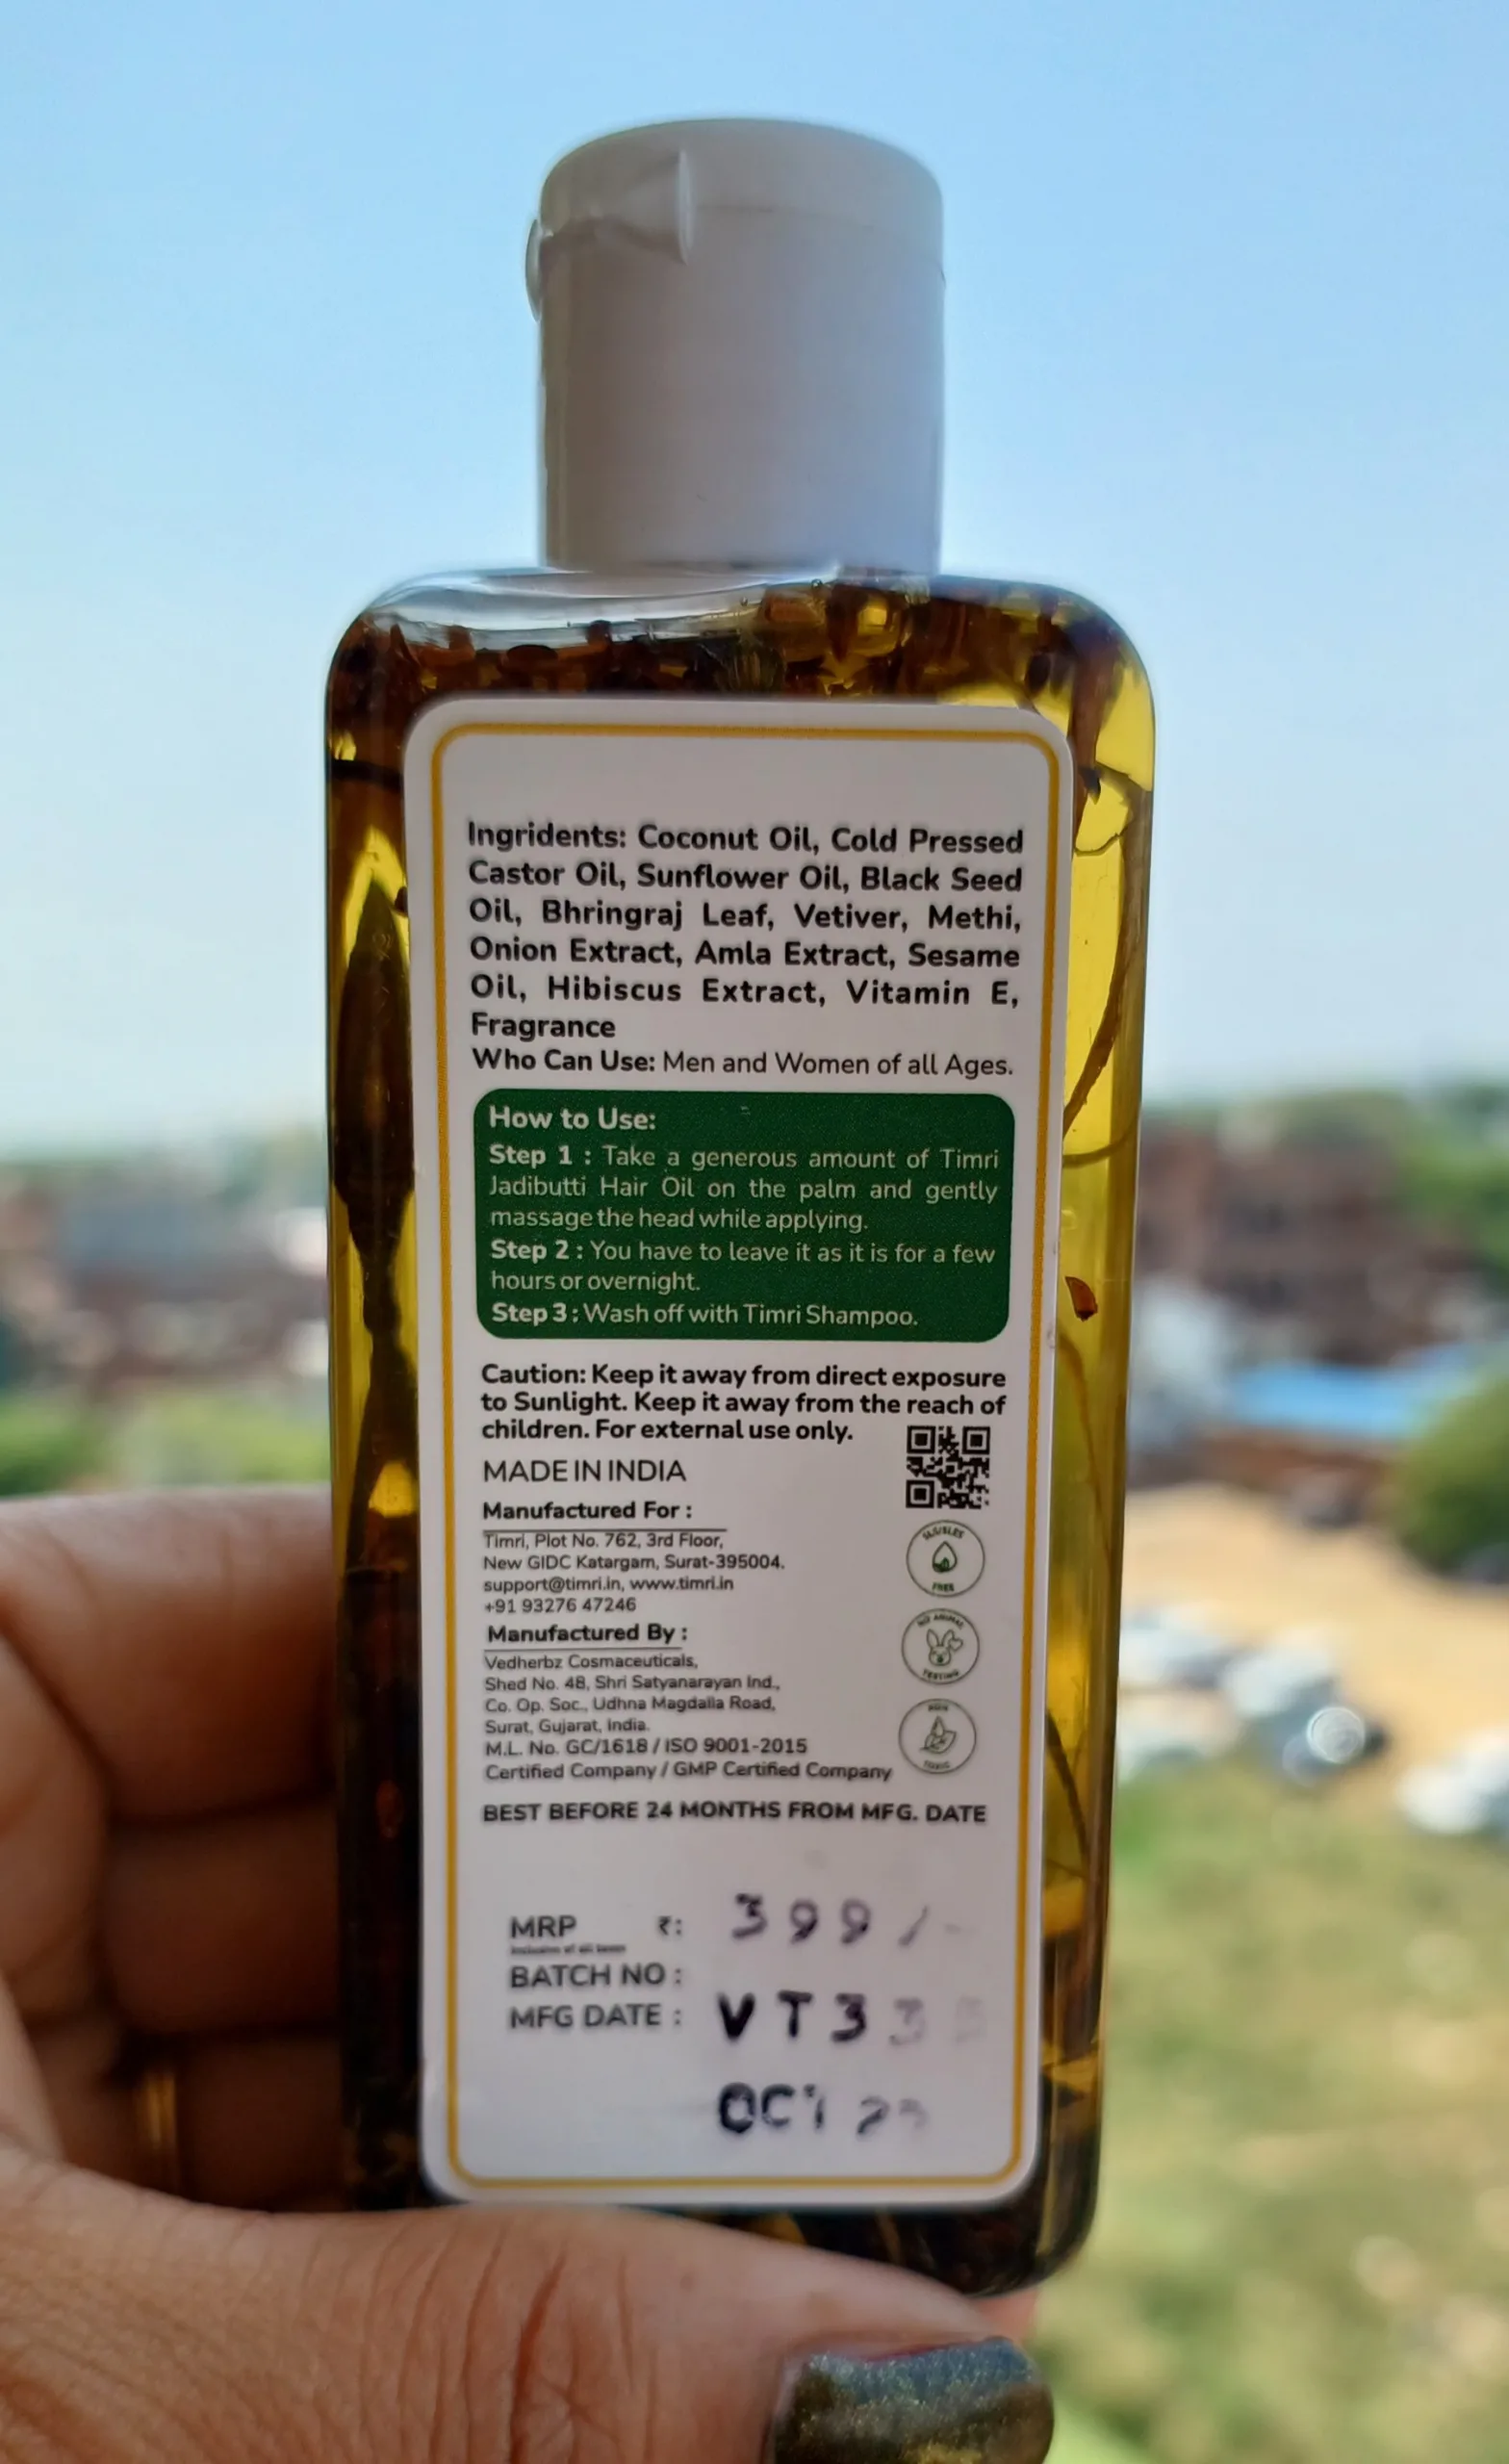 Timri Jadibutti Hair Oil ingredients